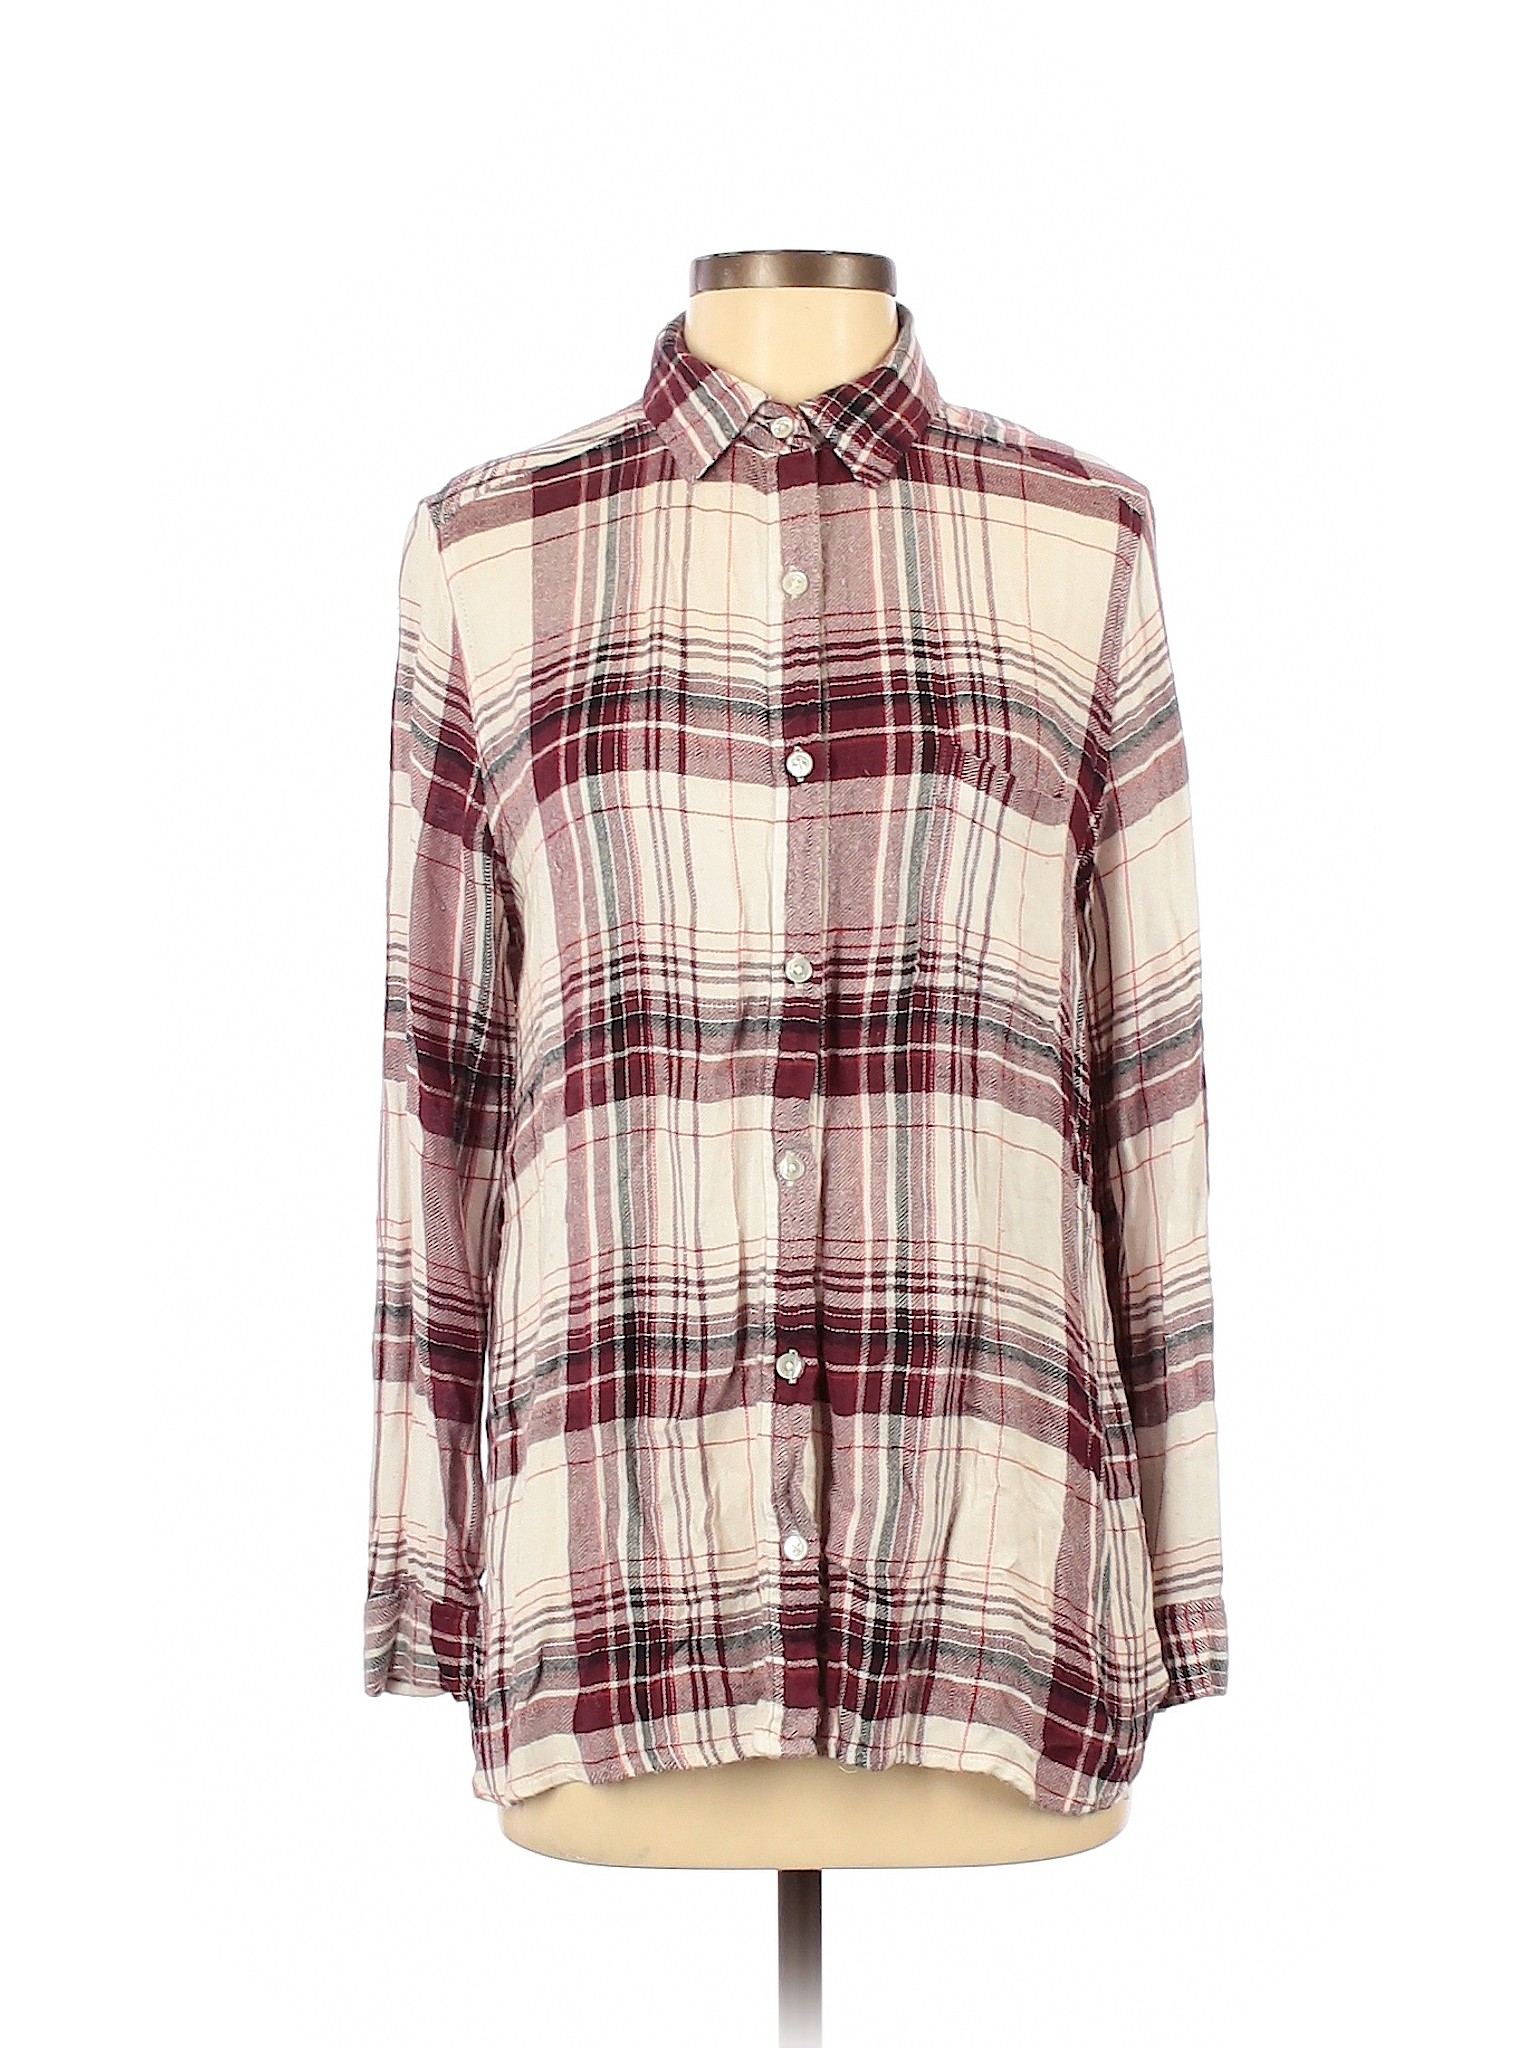 Johnny Cotton Women Ivory Long Sleeve Button-Down Shirt S | eBay